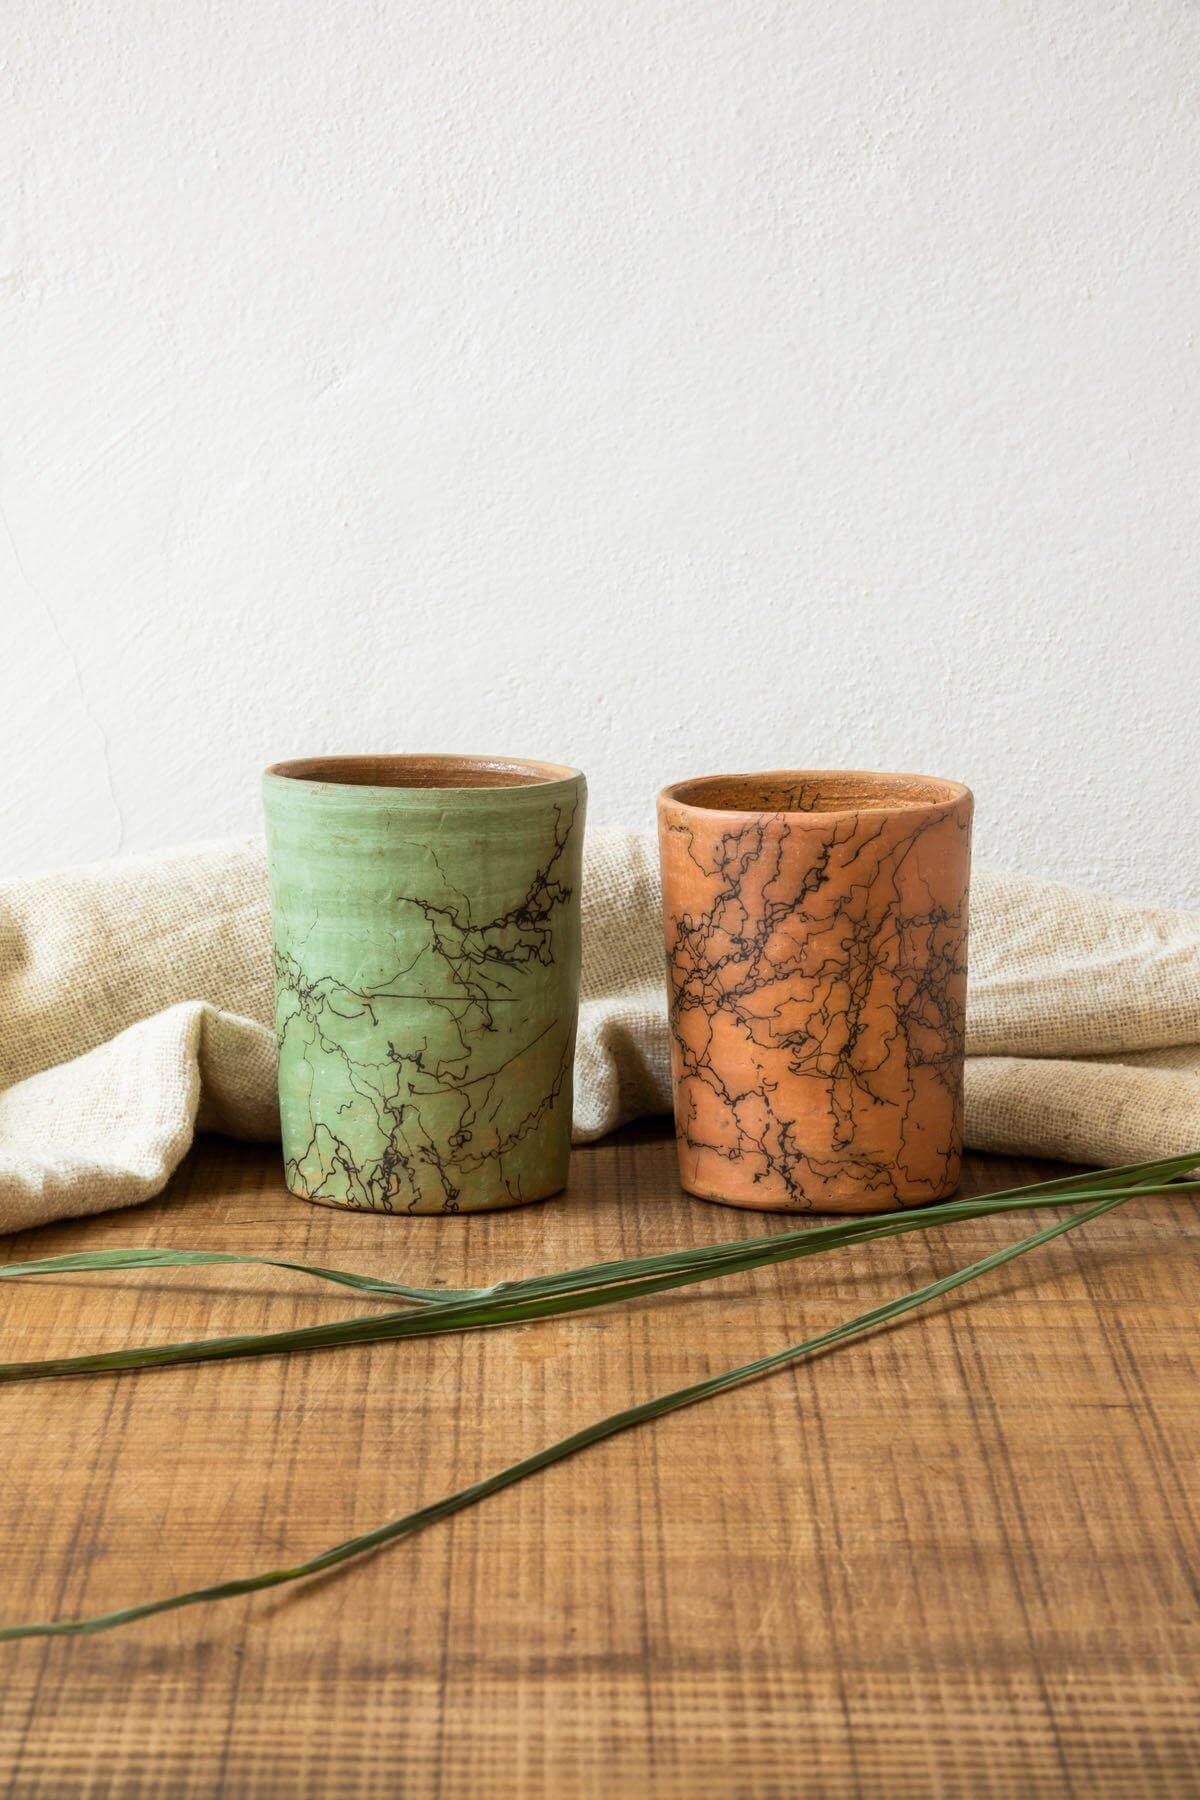 Rooted Handmade Ceramic Mug by Adrián Martínez Alarzón - Wool+Clay